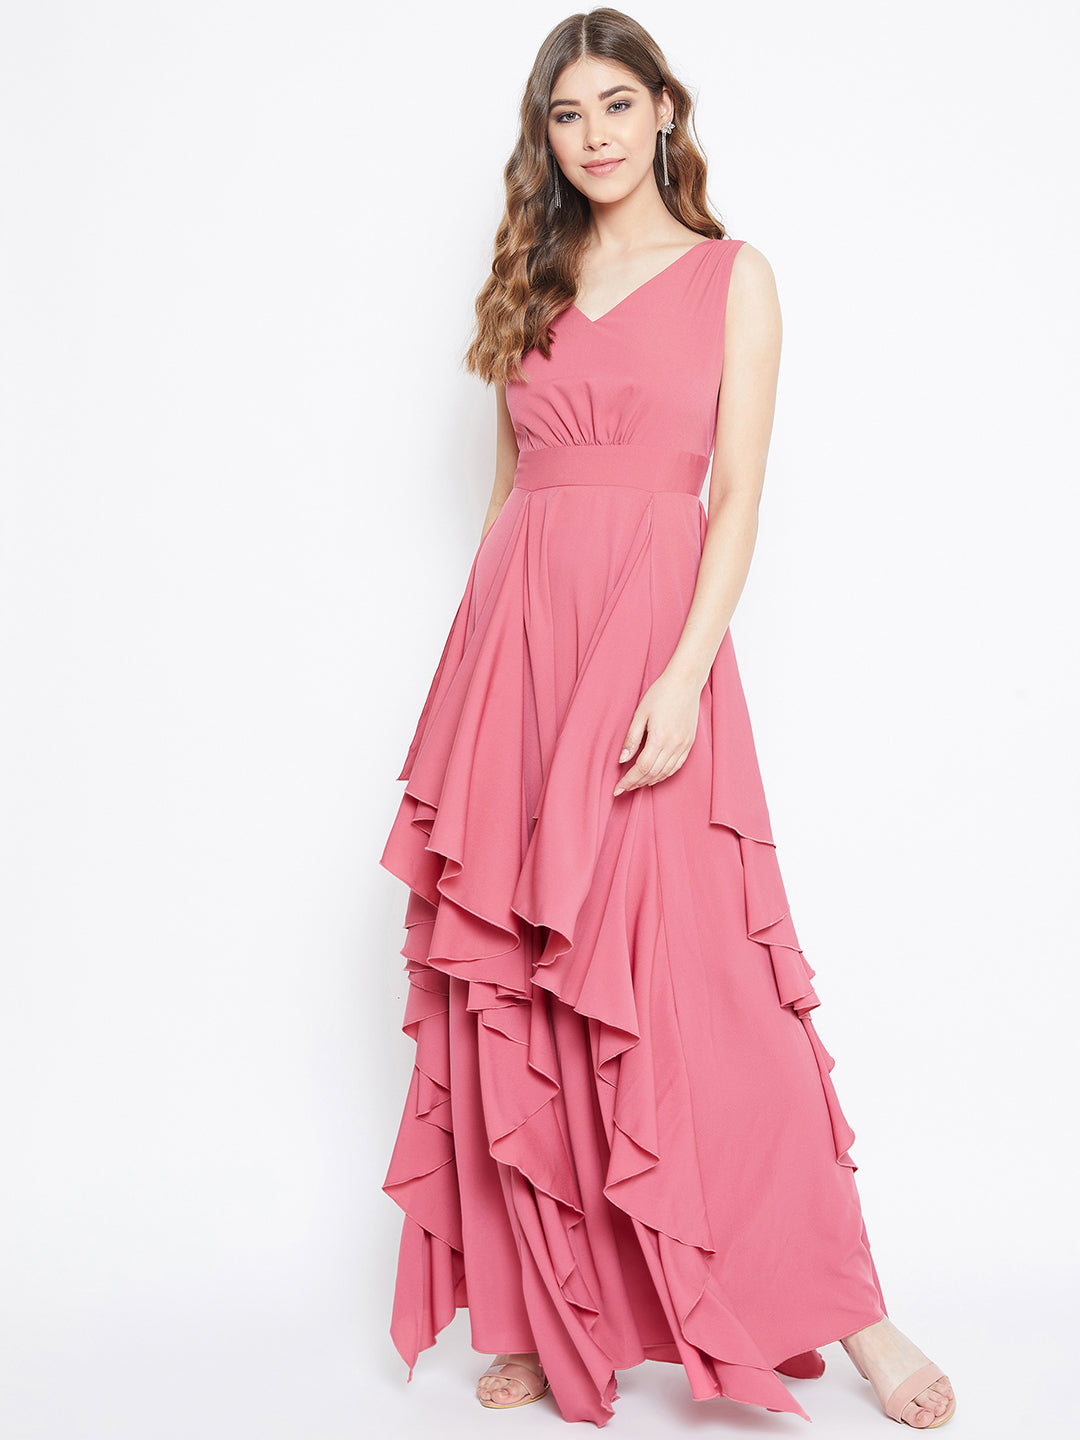 Berrylush Women Solid Pink V-Neck Sleeveless Fit & Flare Maxi Dress